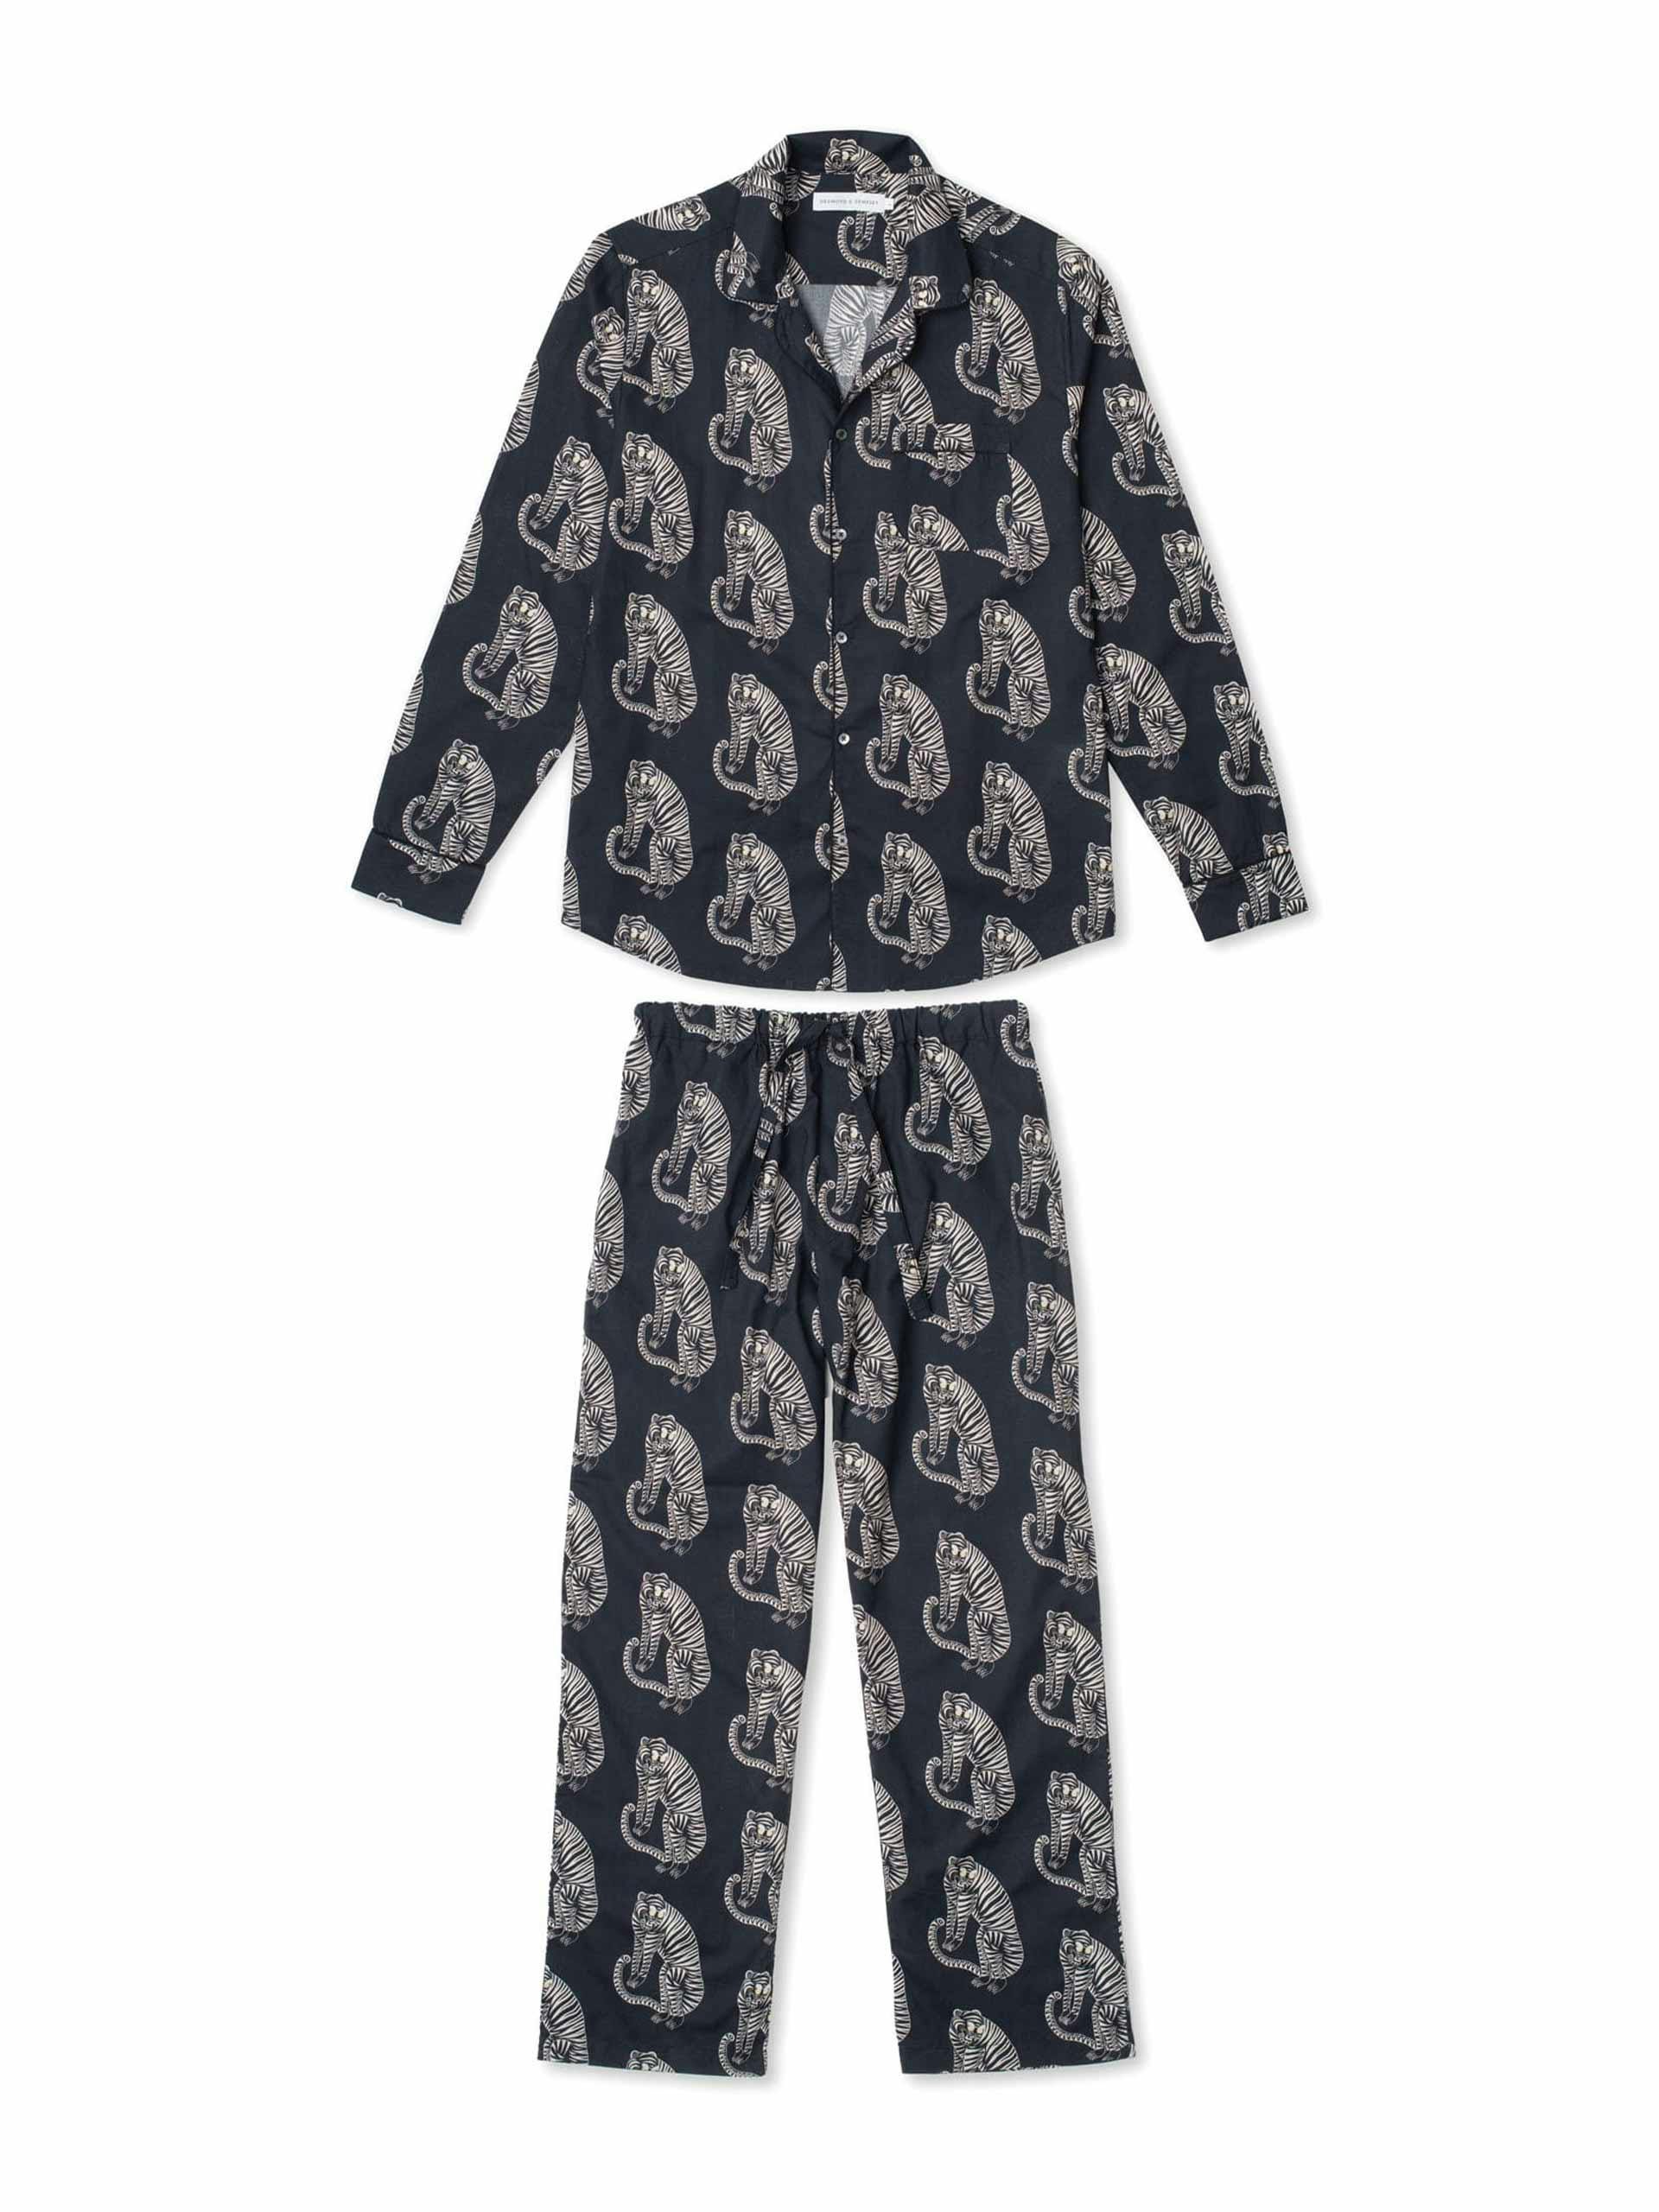 Men’s Sansindo tiger print long pyjama set